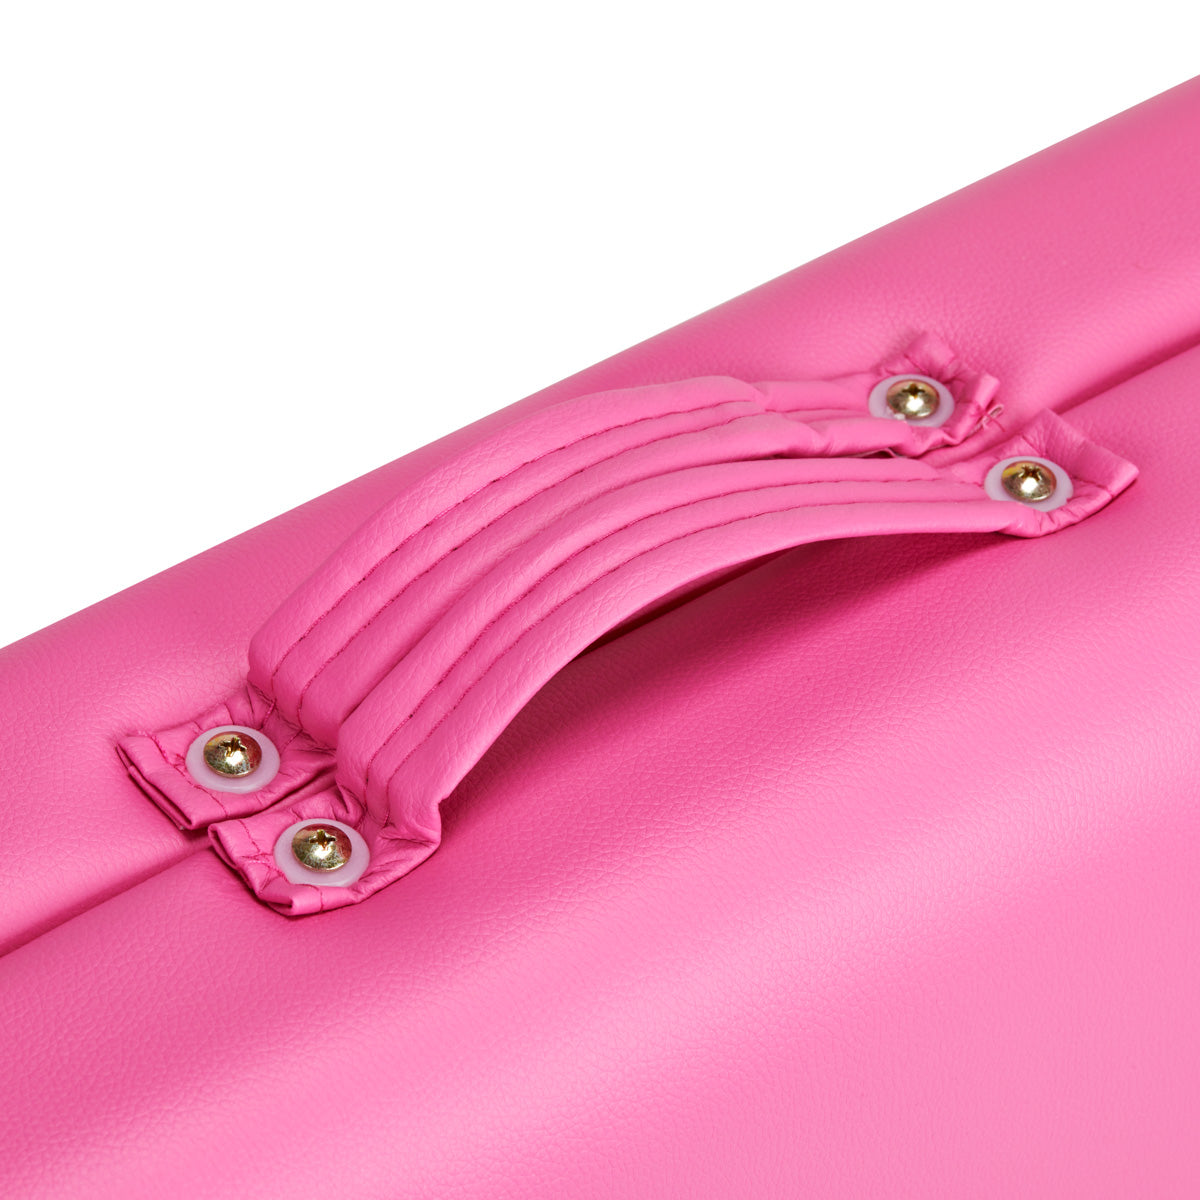 Folding massage table wooden Activ Fizjo comfort 2 segment pink